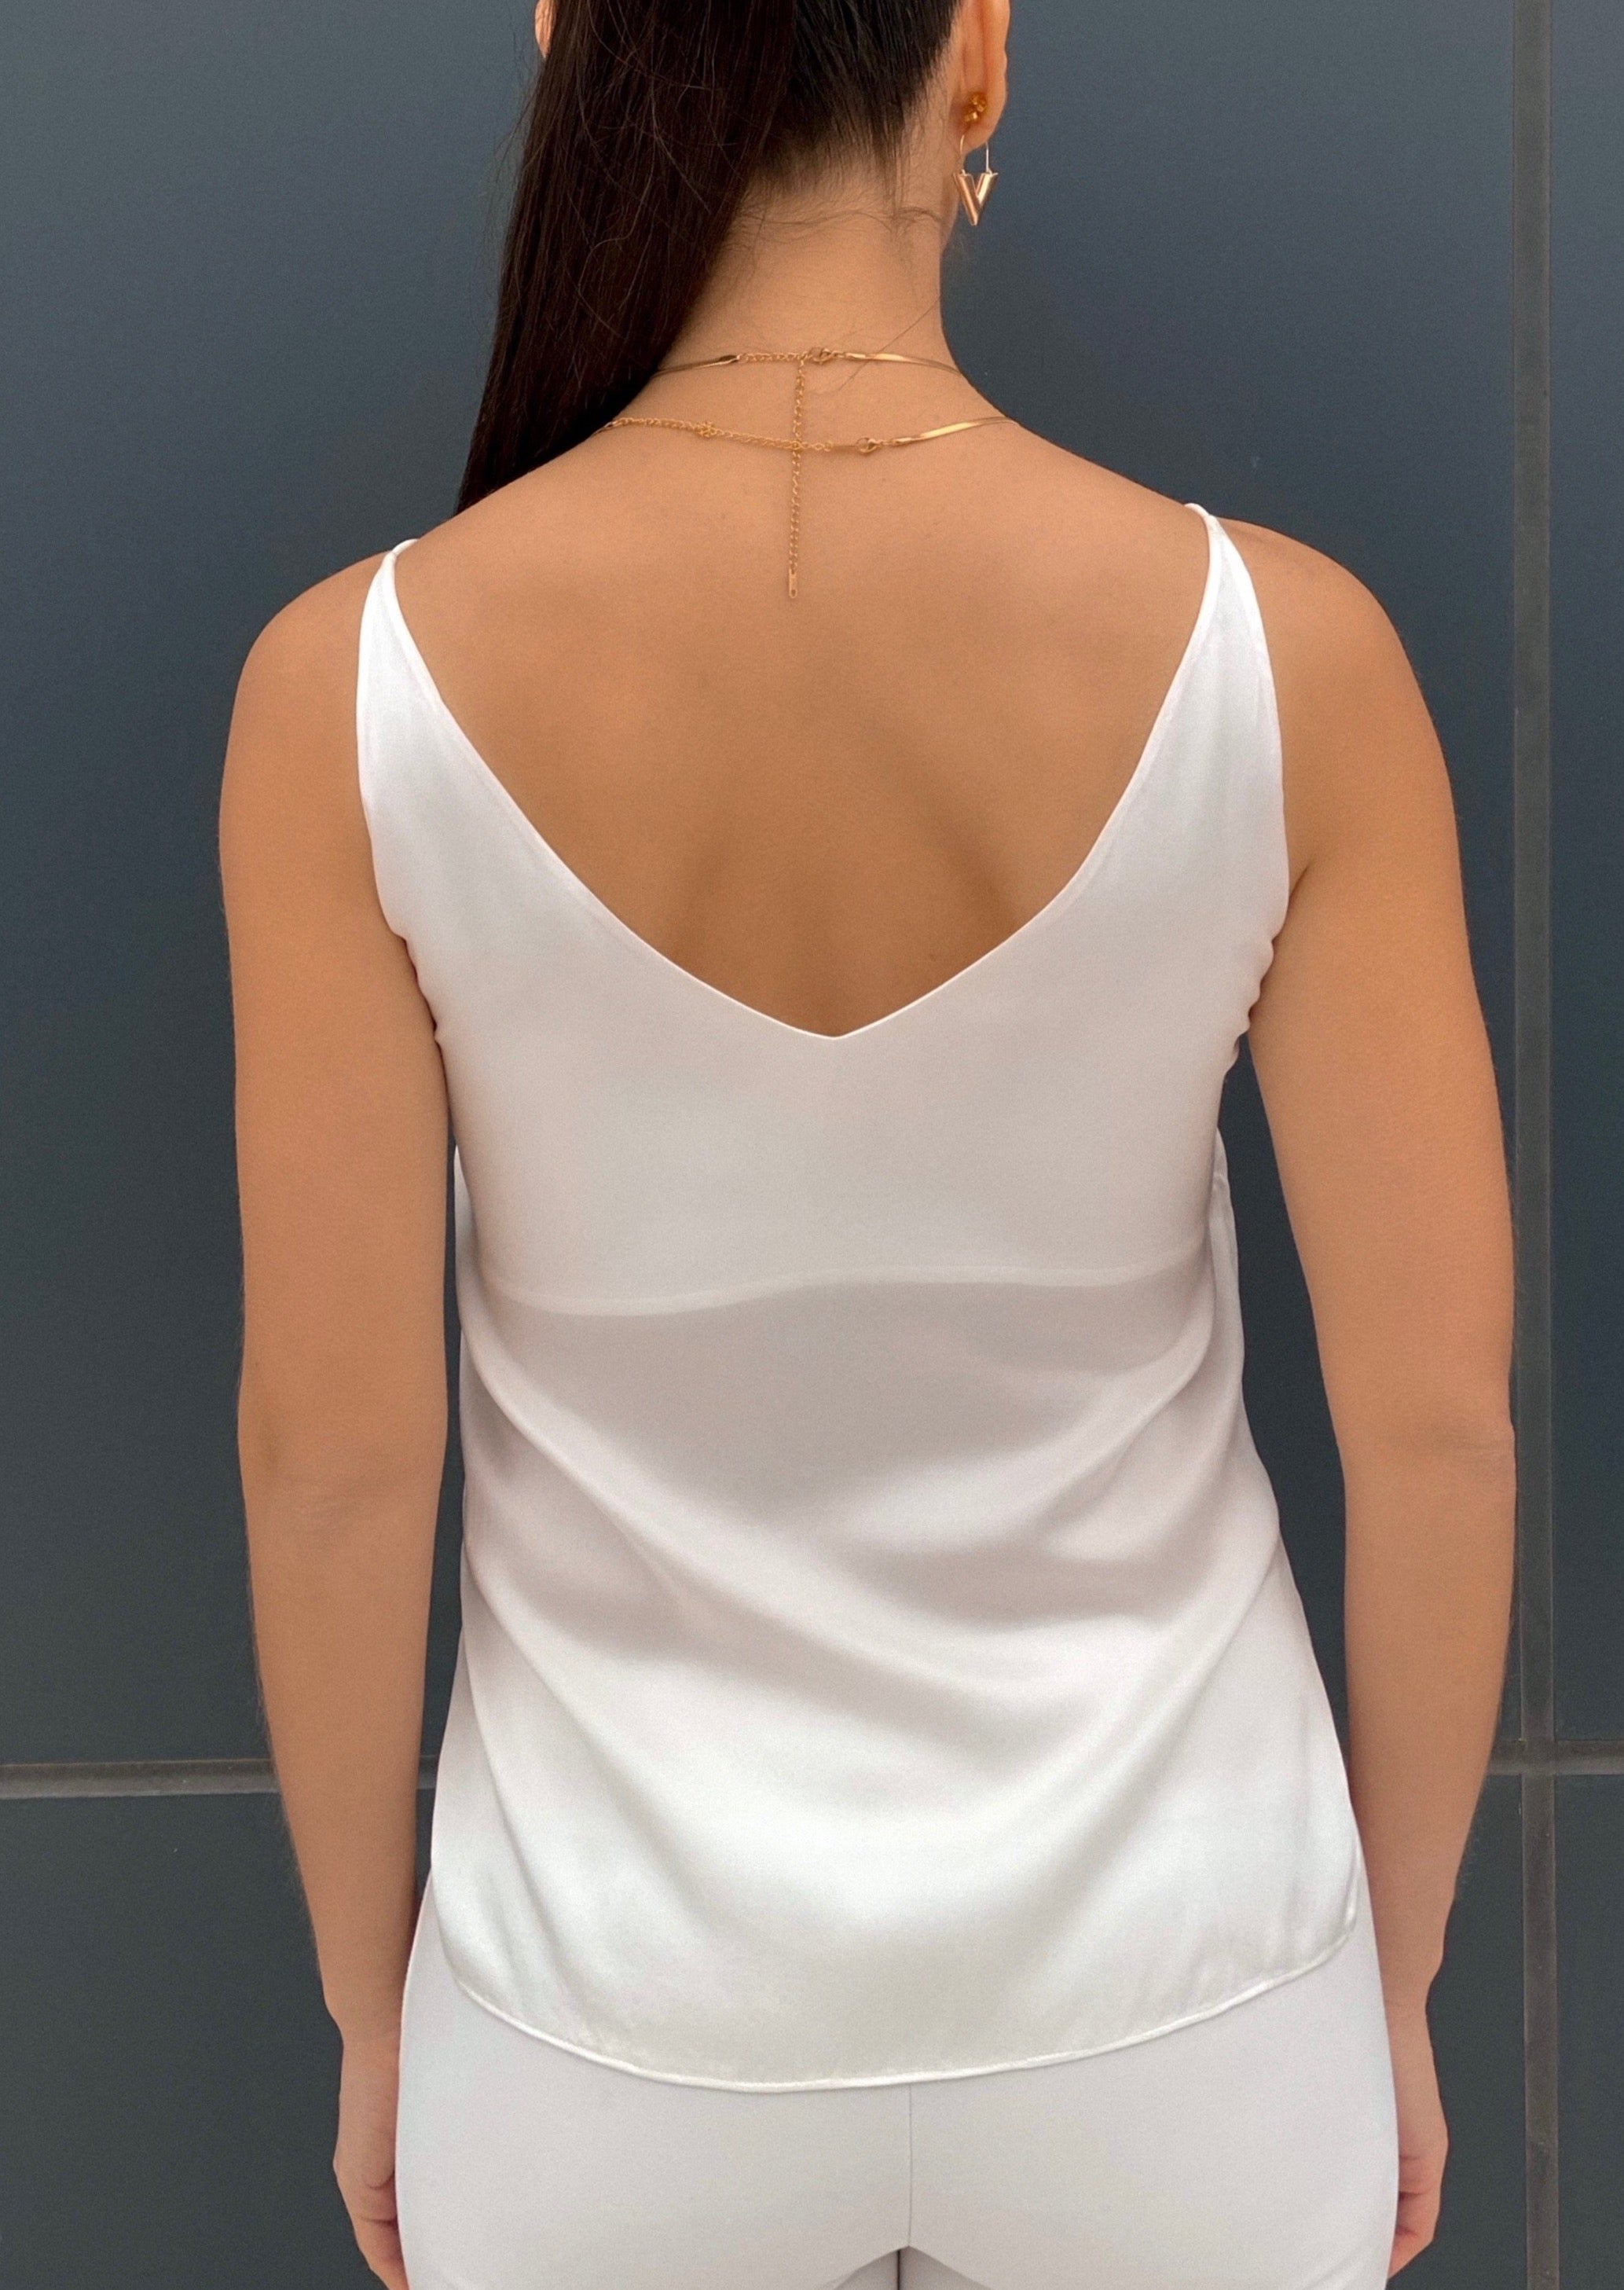 Silk camisole top in luscious white